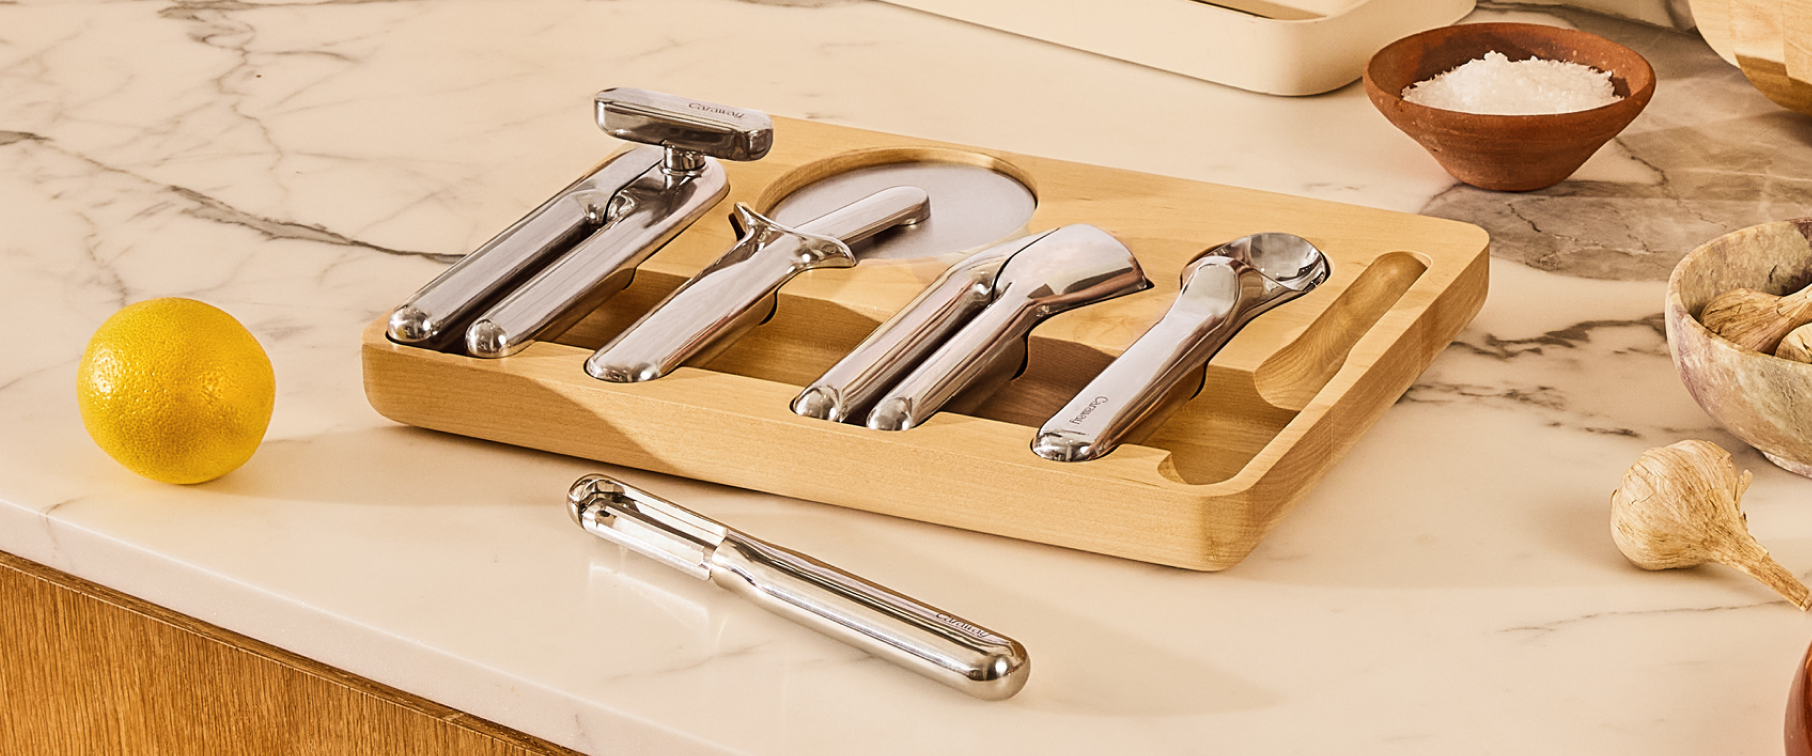 Kitchen Gadgets Set - Storage Lifestyle on Countertop